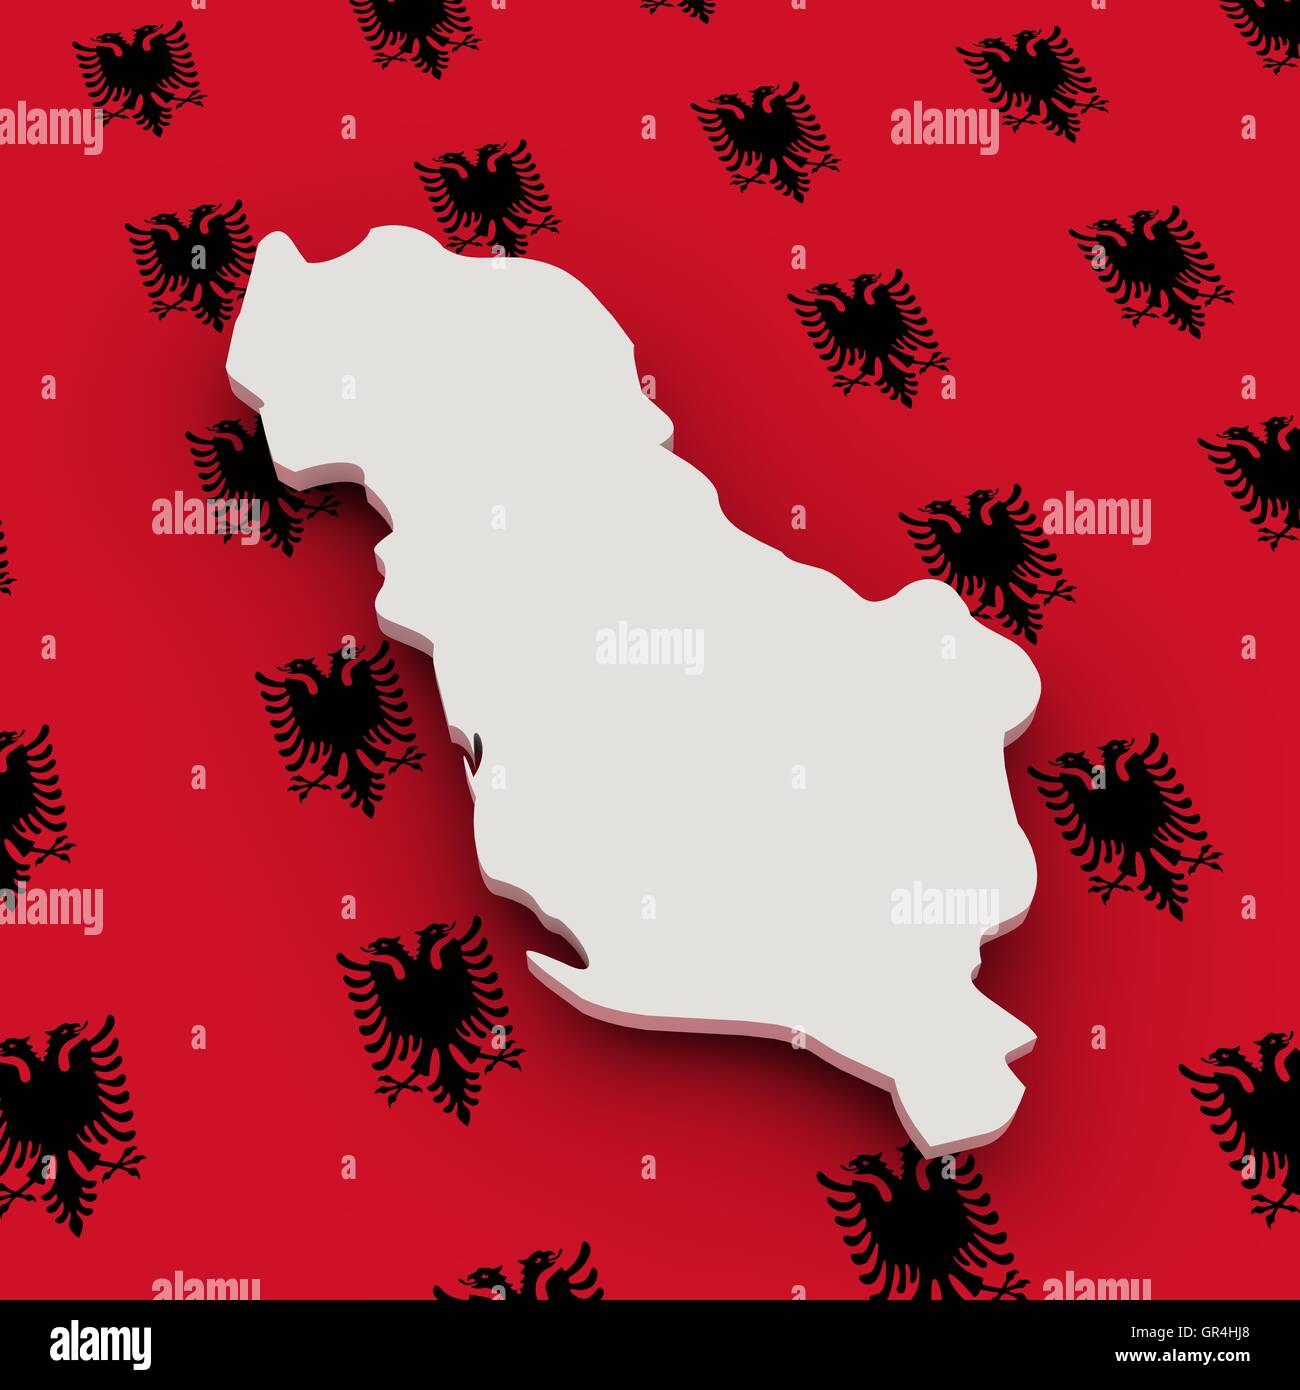 Albania map and flag Stock Photo